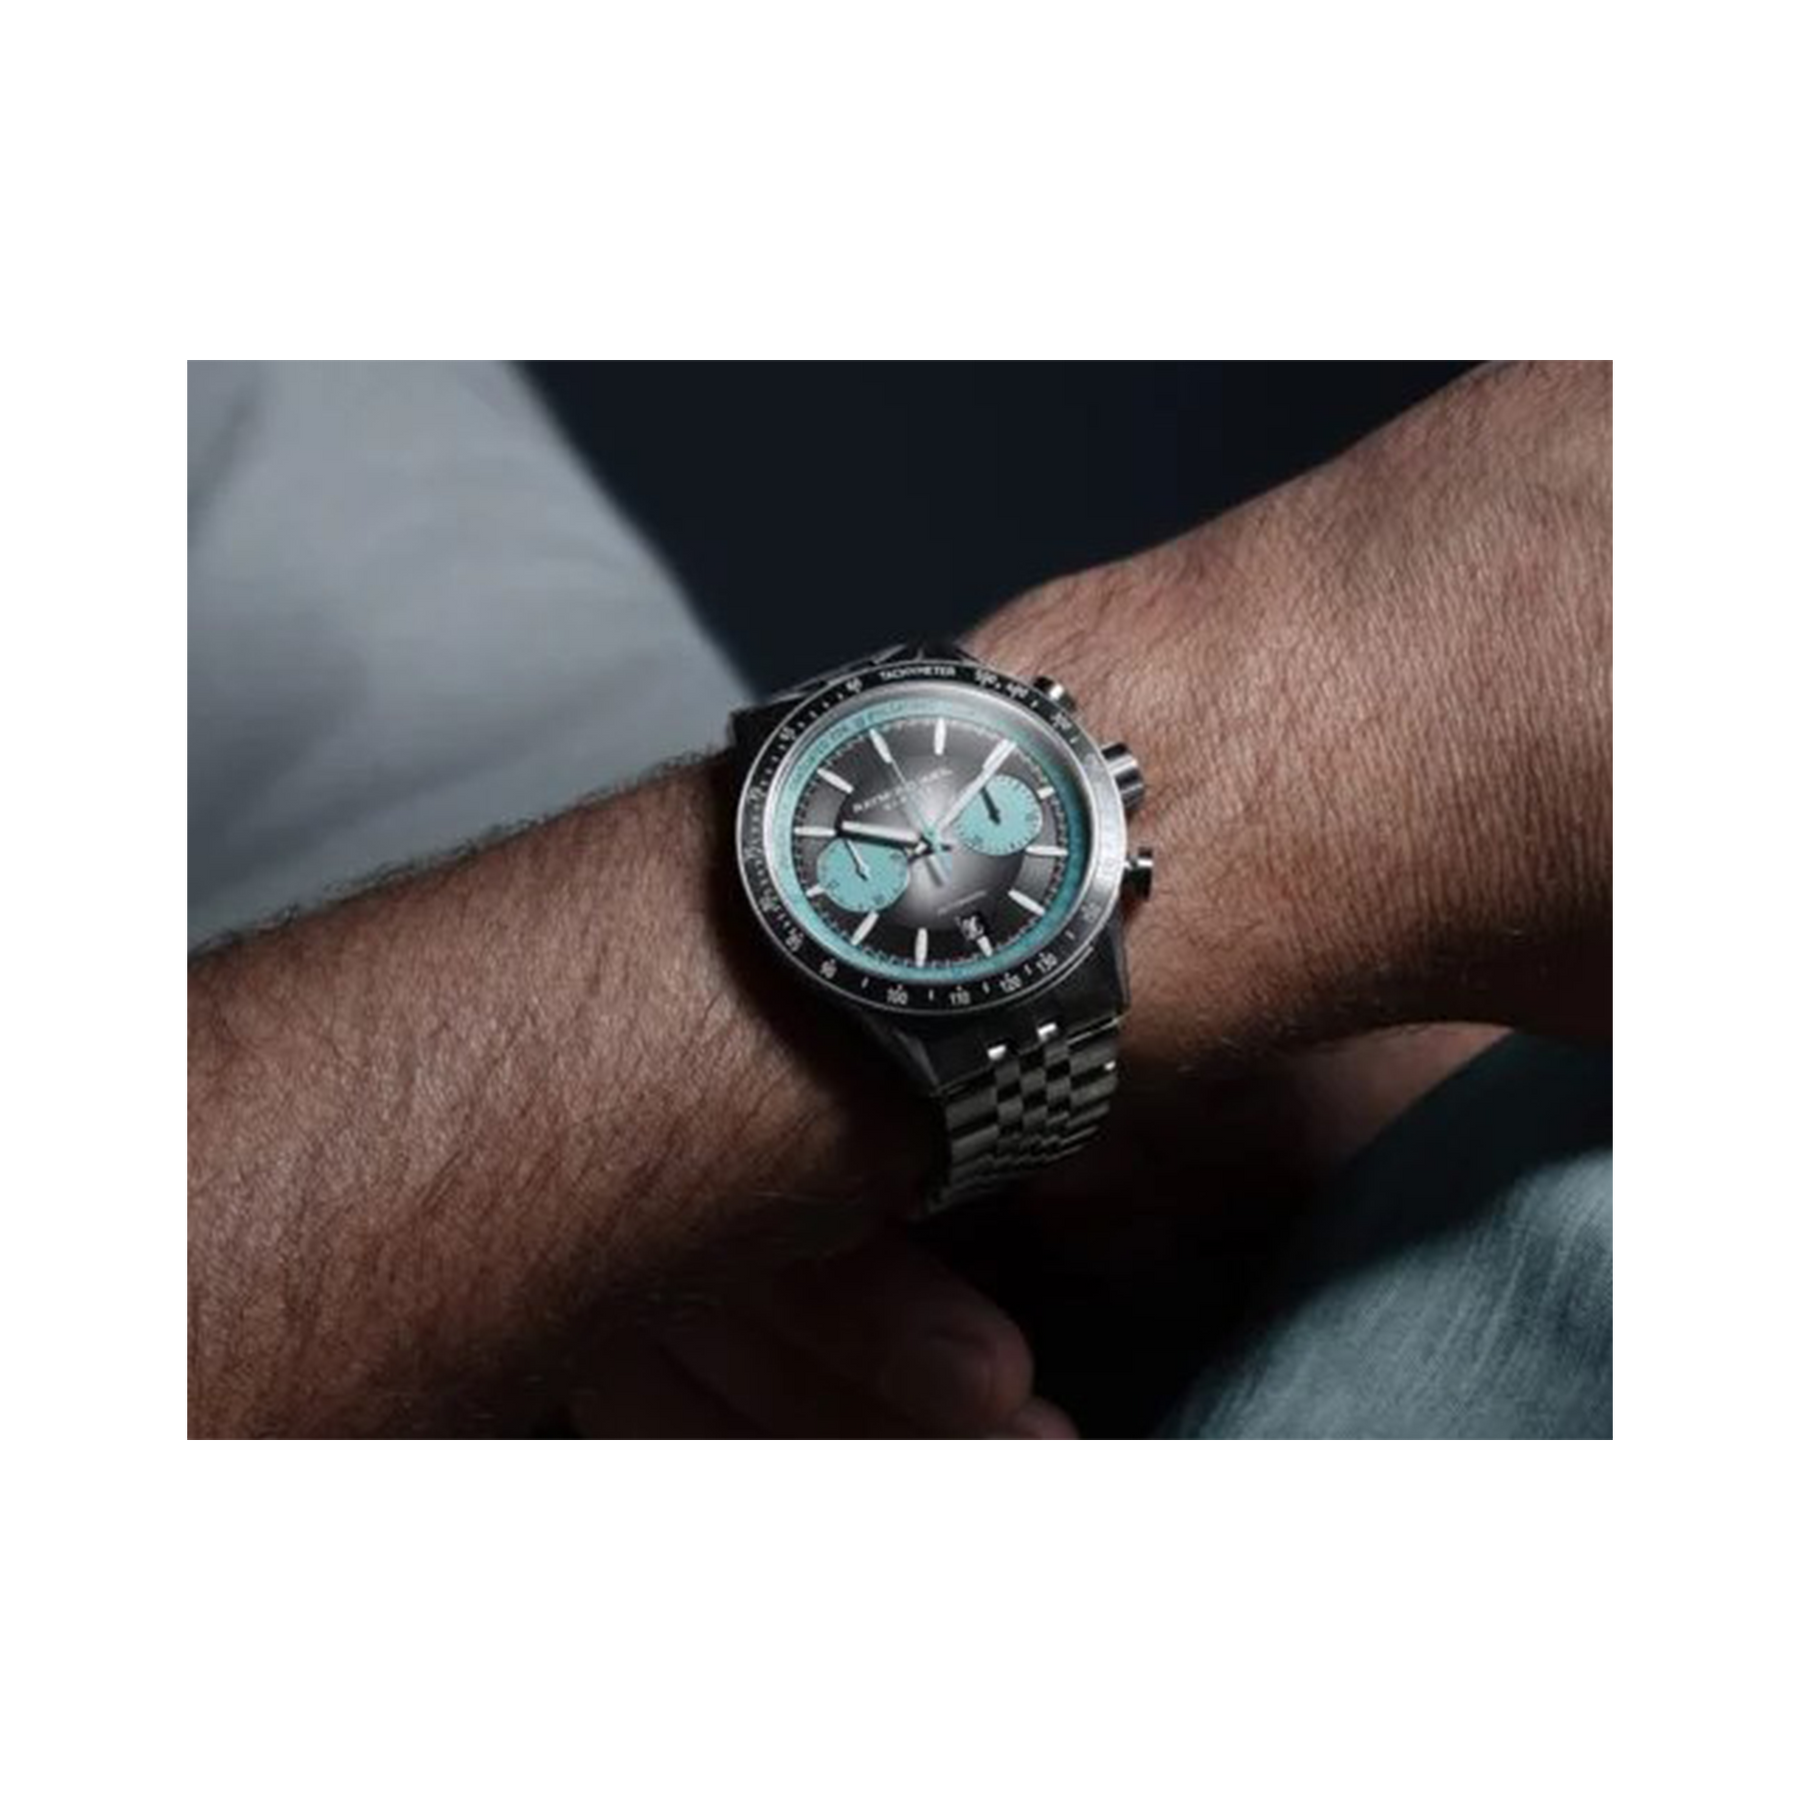 Raymond Weil Freelancer Men’s 43.50mm Automatic Chronograph Watch 7780-TI-20425